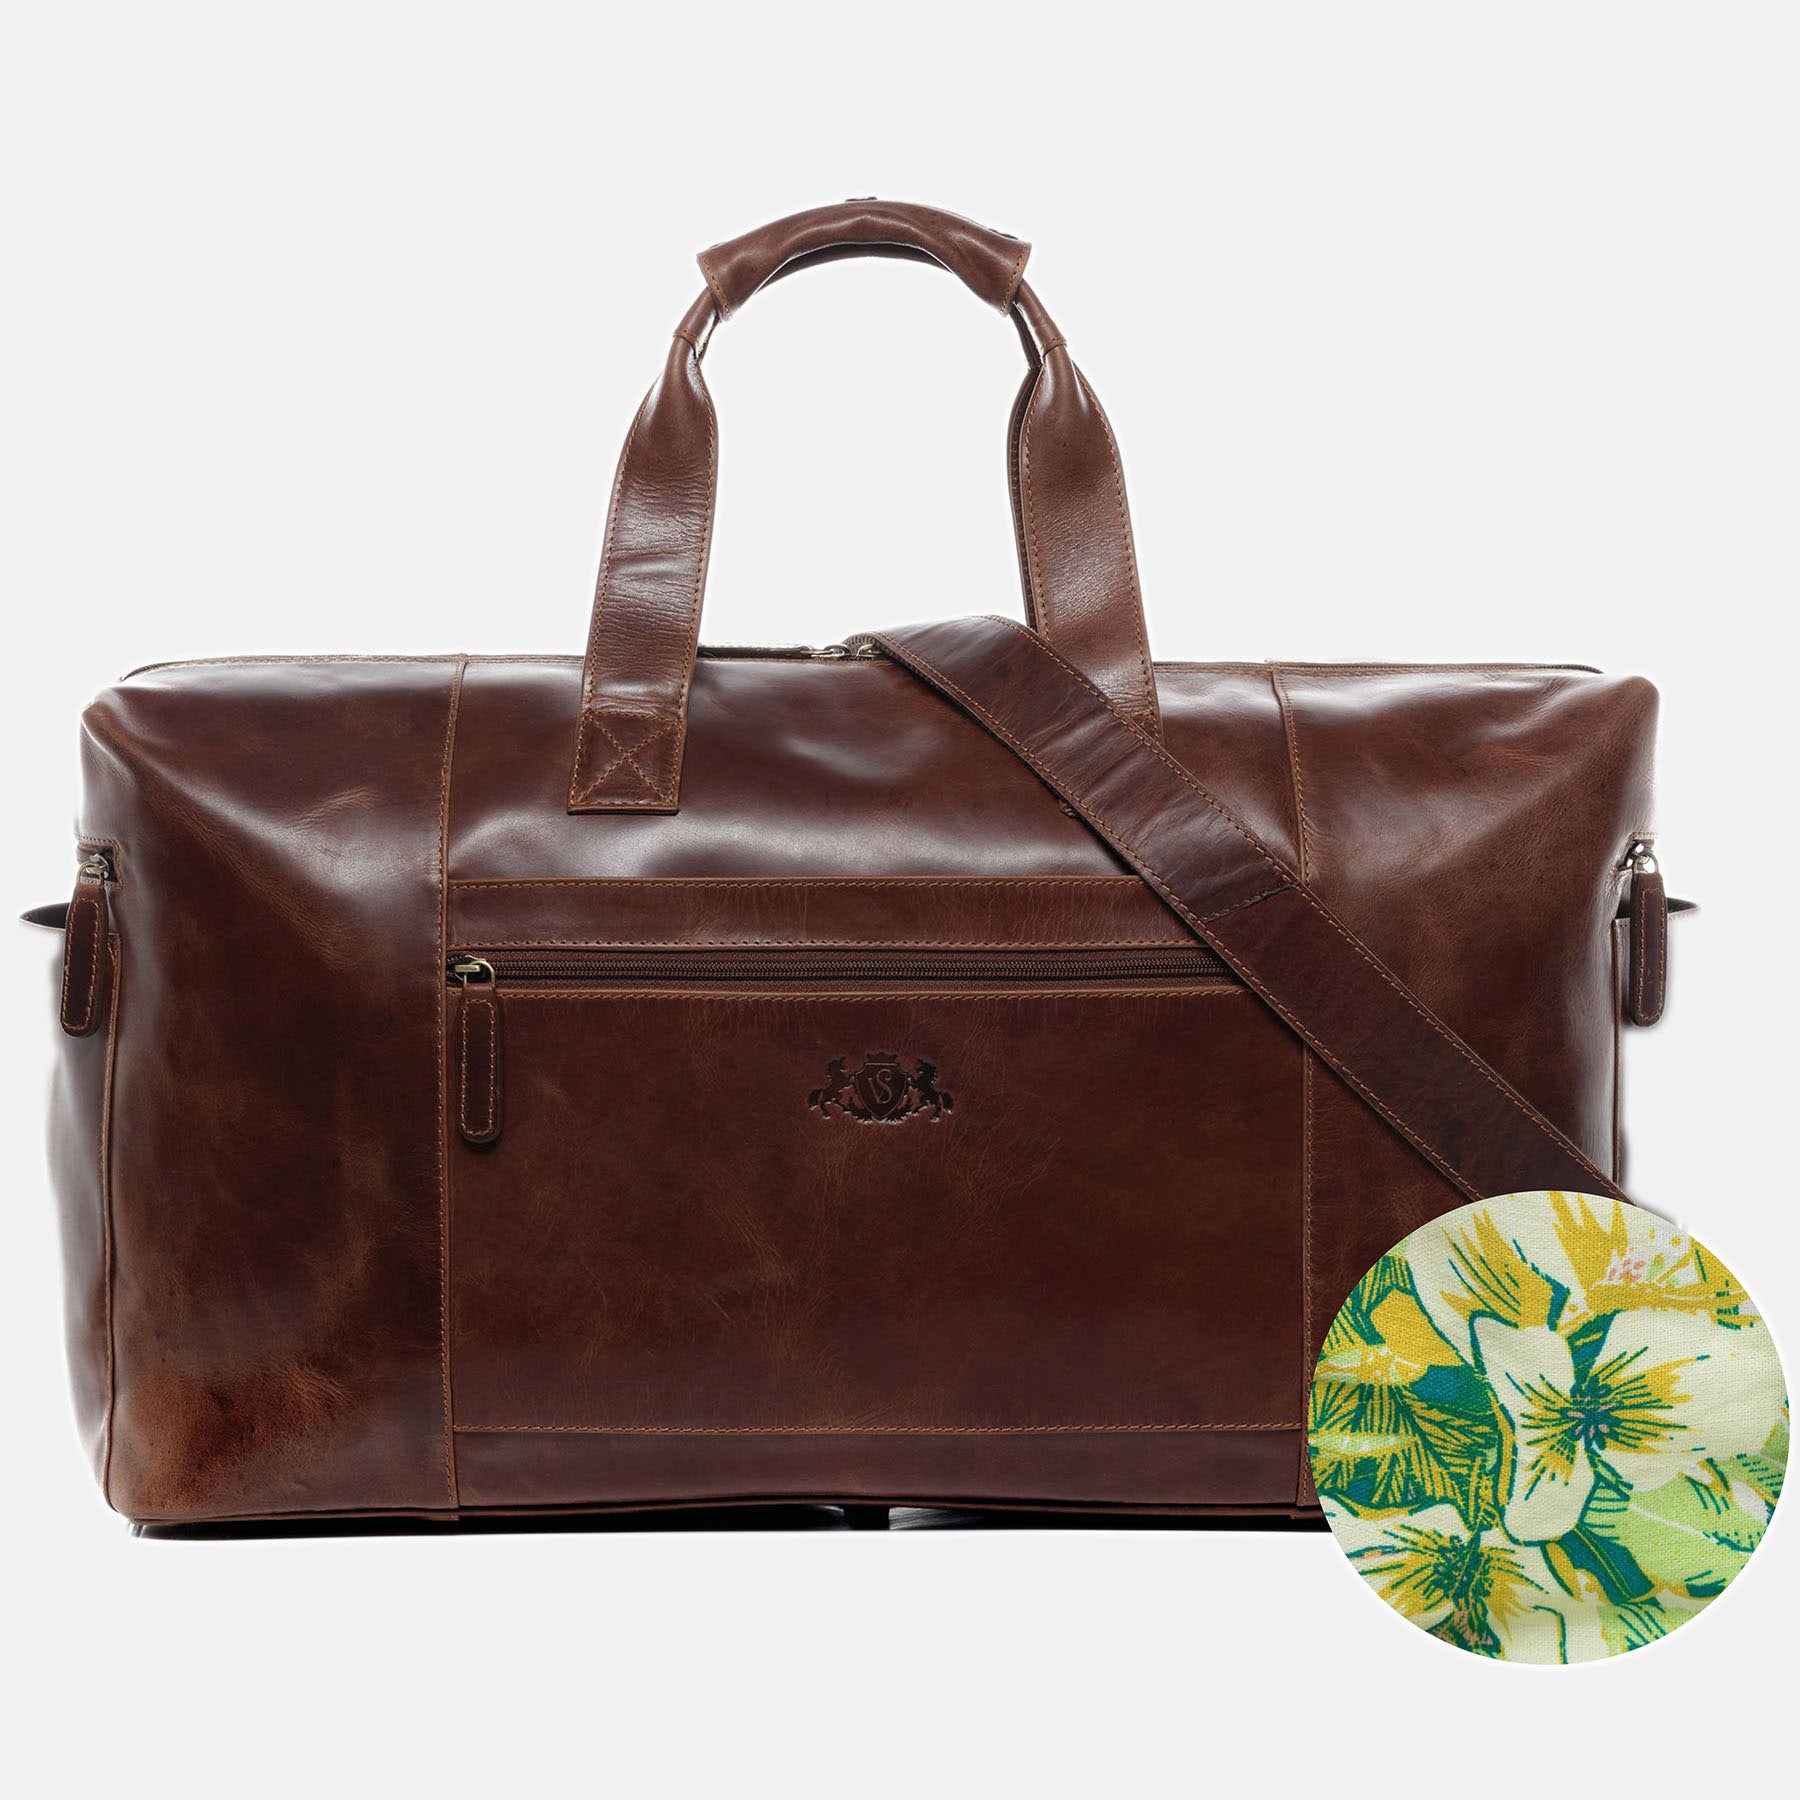 Travel bag BRISTOL natural leather brown-cognac